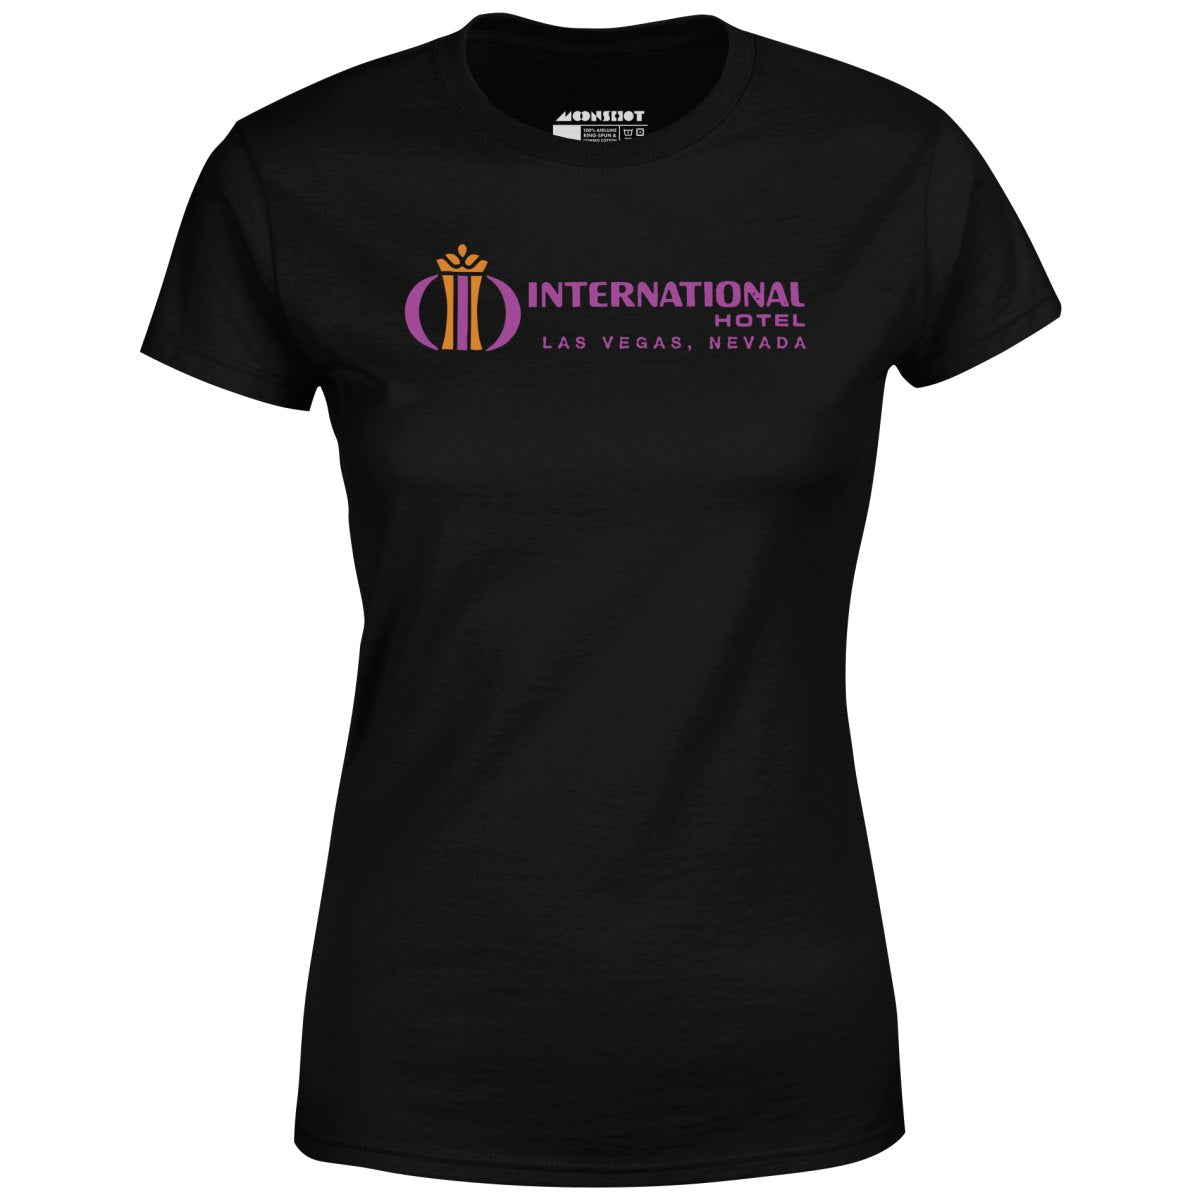 International Hotel - Vintage Las Vegas - Women's T-Shirt